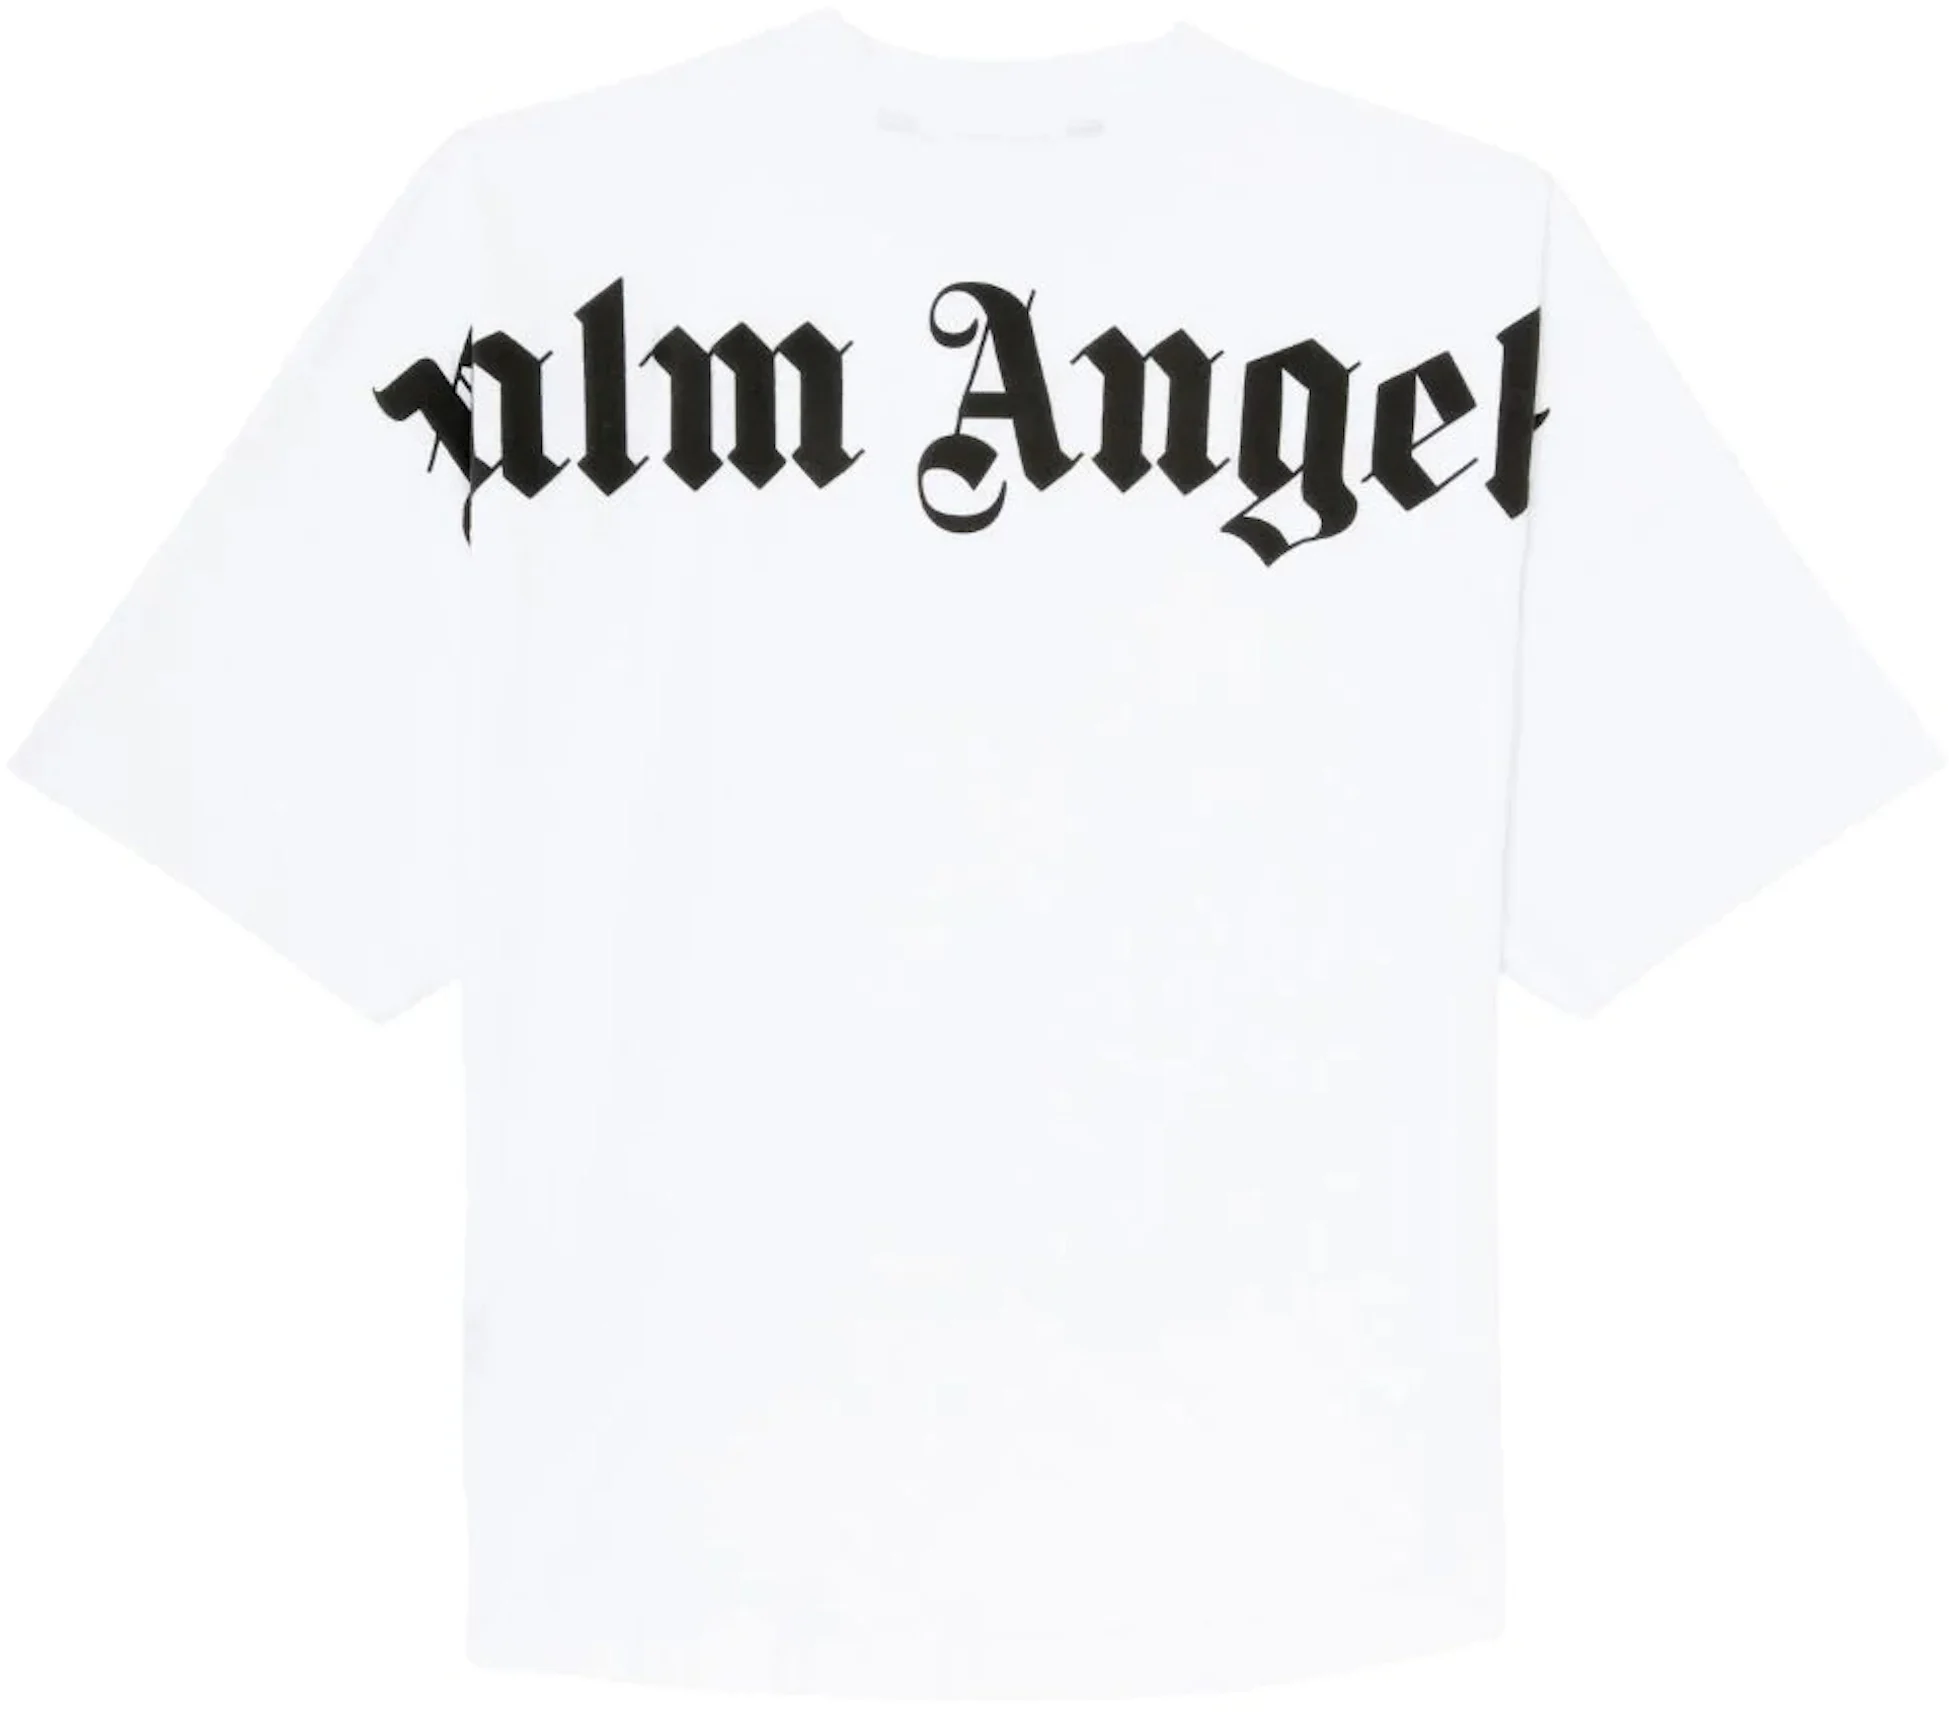 Seasonal logo cotton t-shirt - Palm Angels - Men | Luisaviaroma